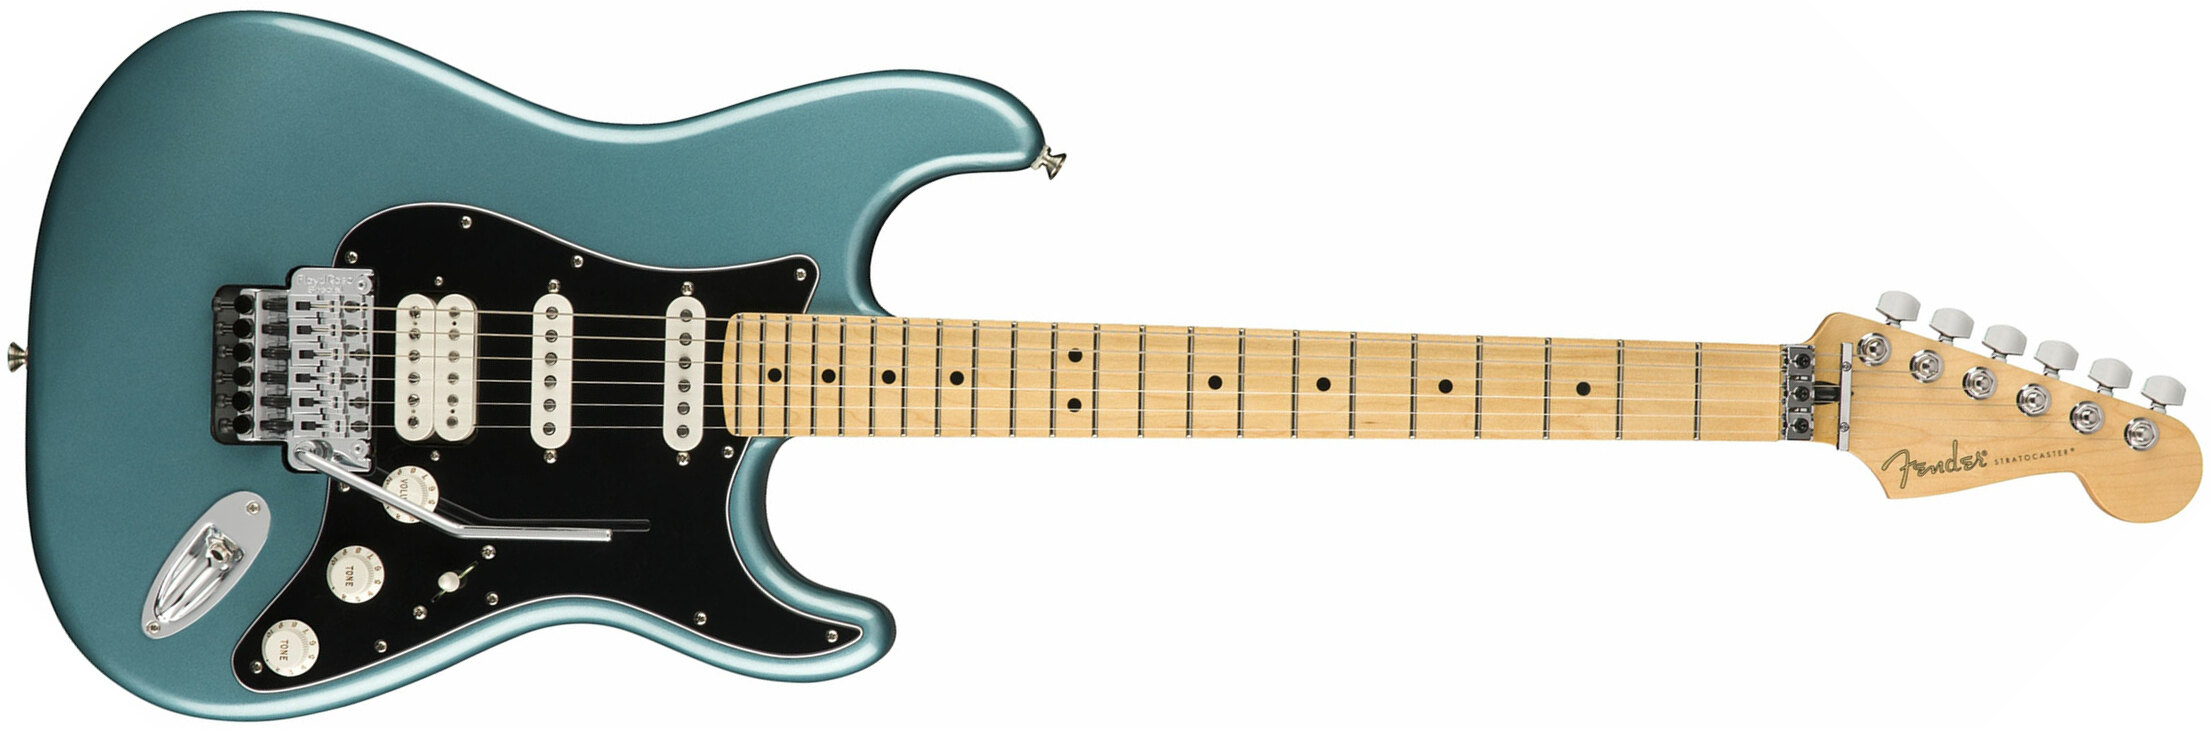 Fender Strat Player Floyd Rose Mex Hss Fr Mn - Tidepool - Guitare Électrique Forme Str - Main picture